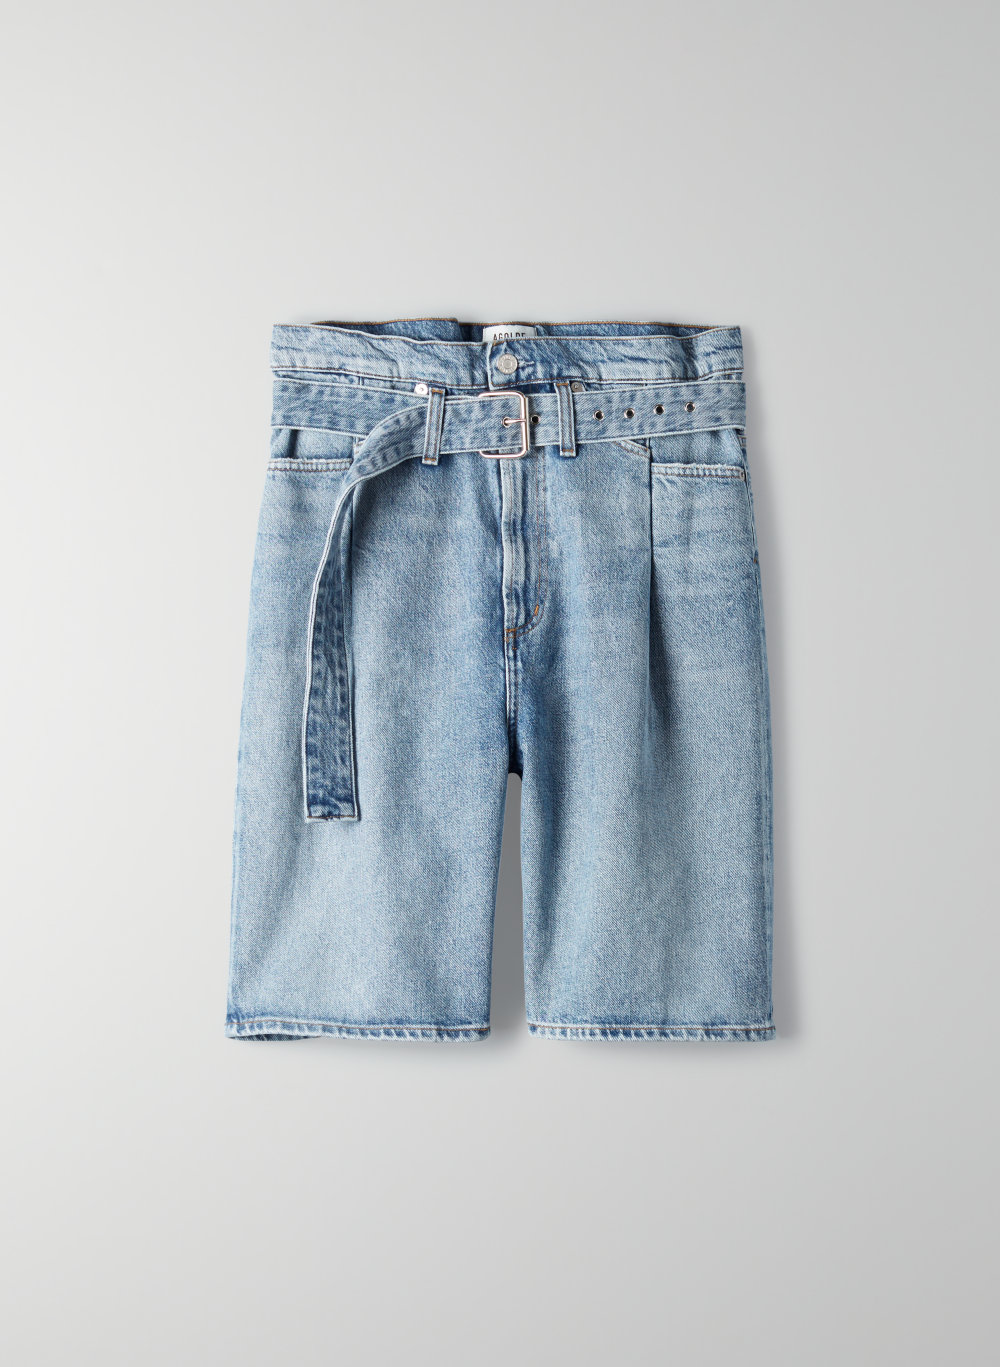 90s jean shorts